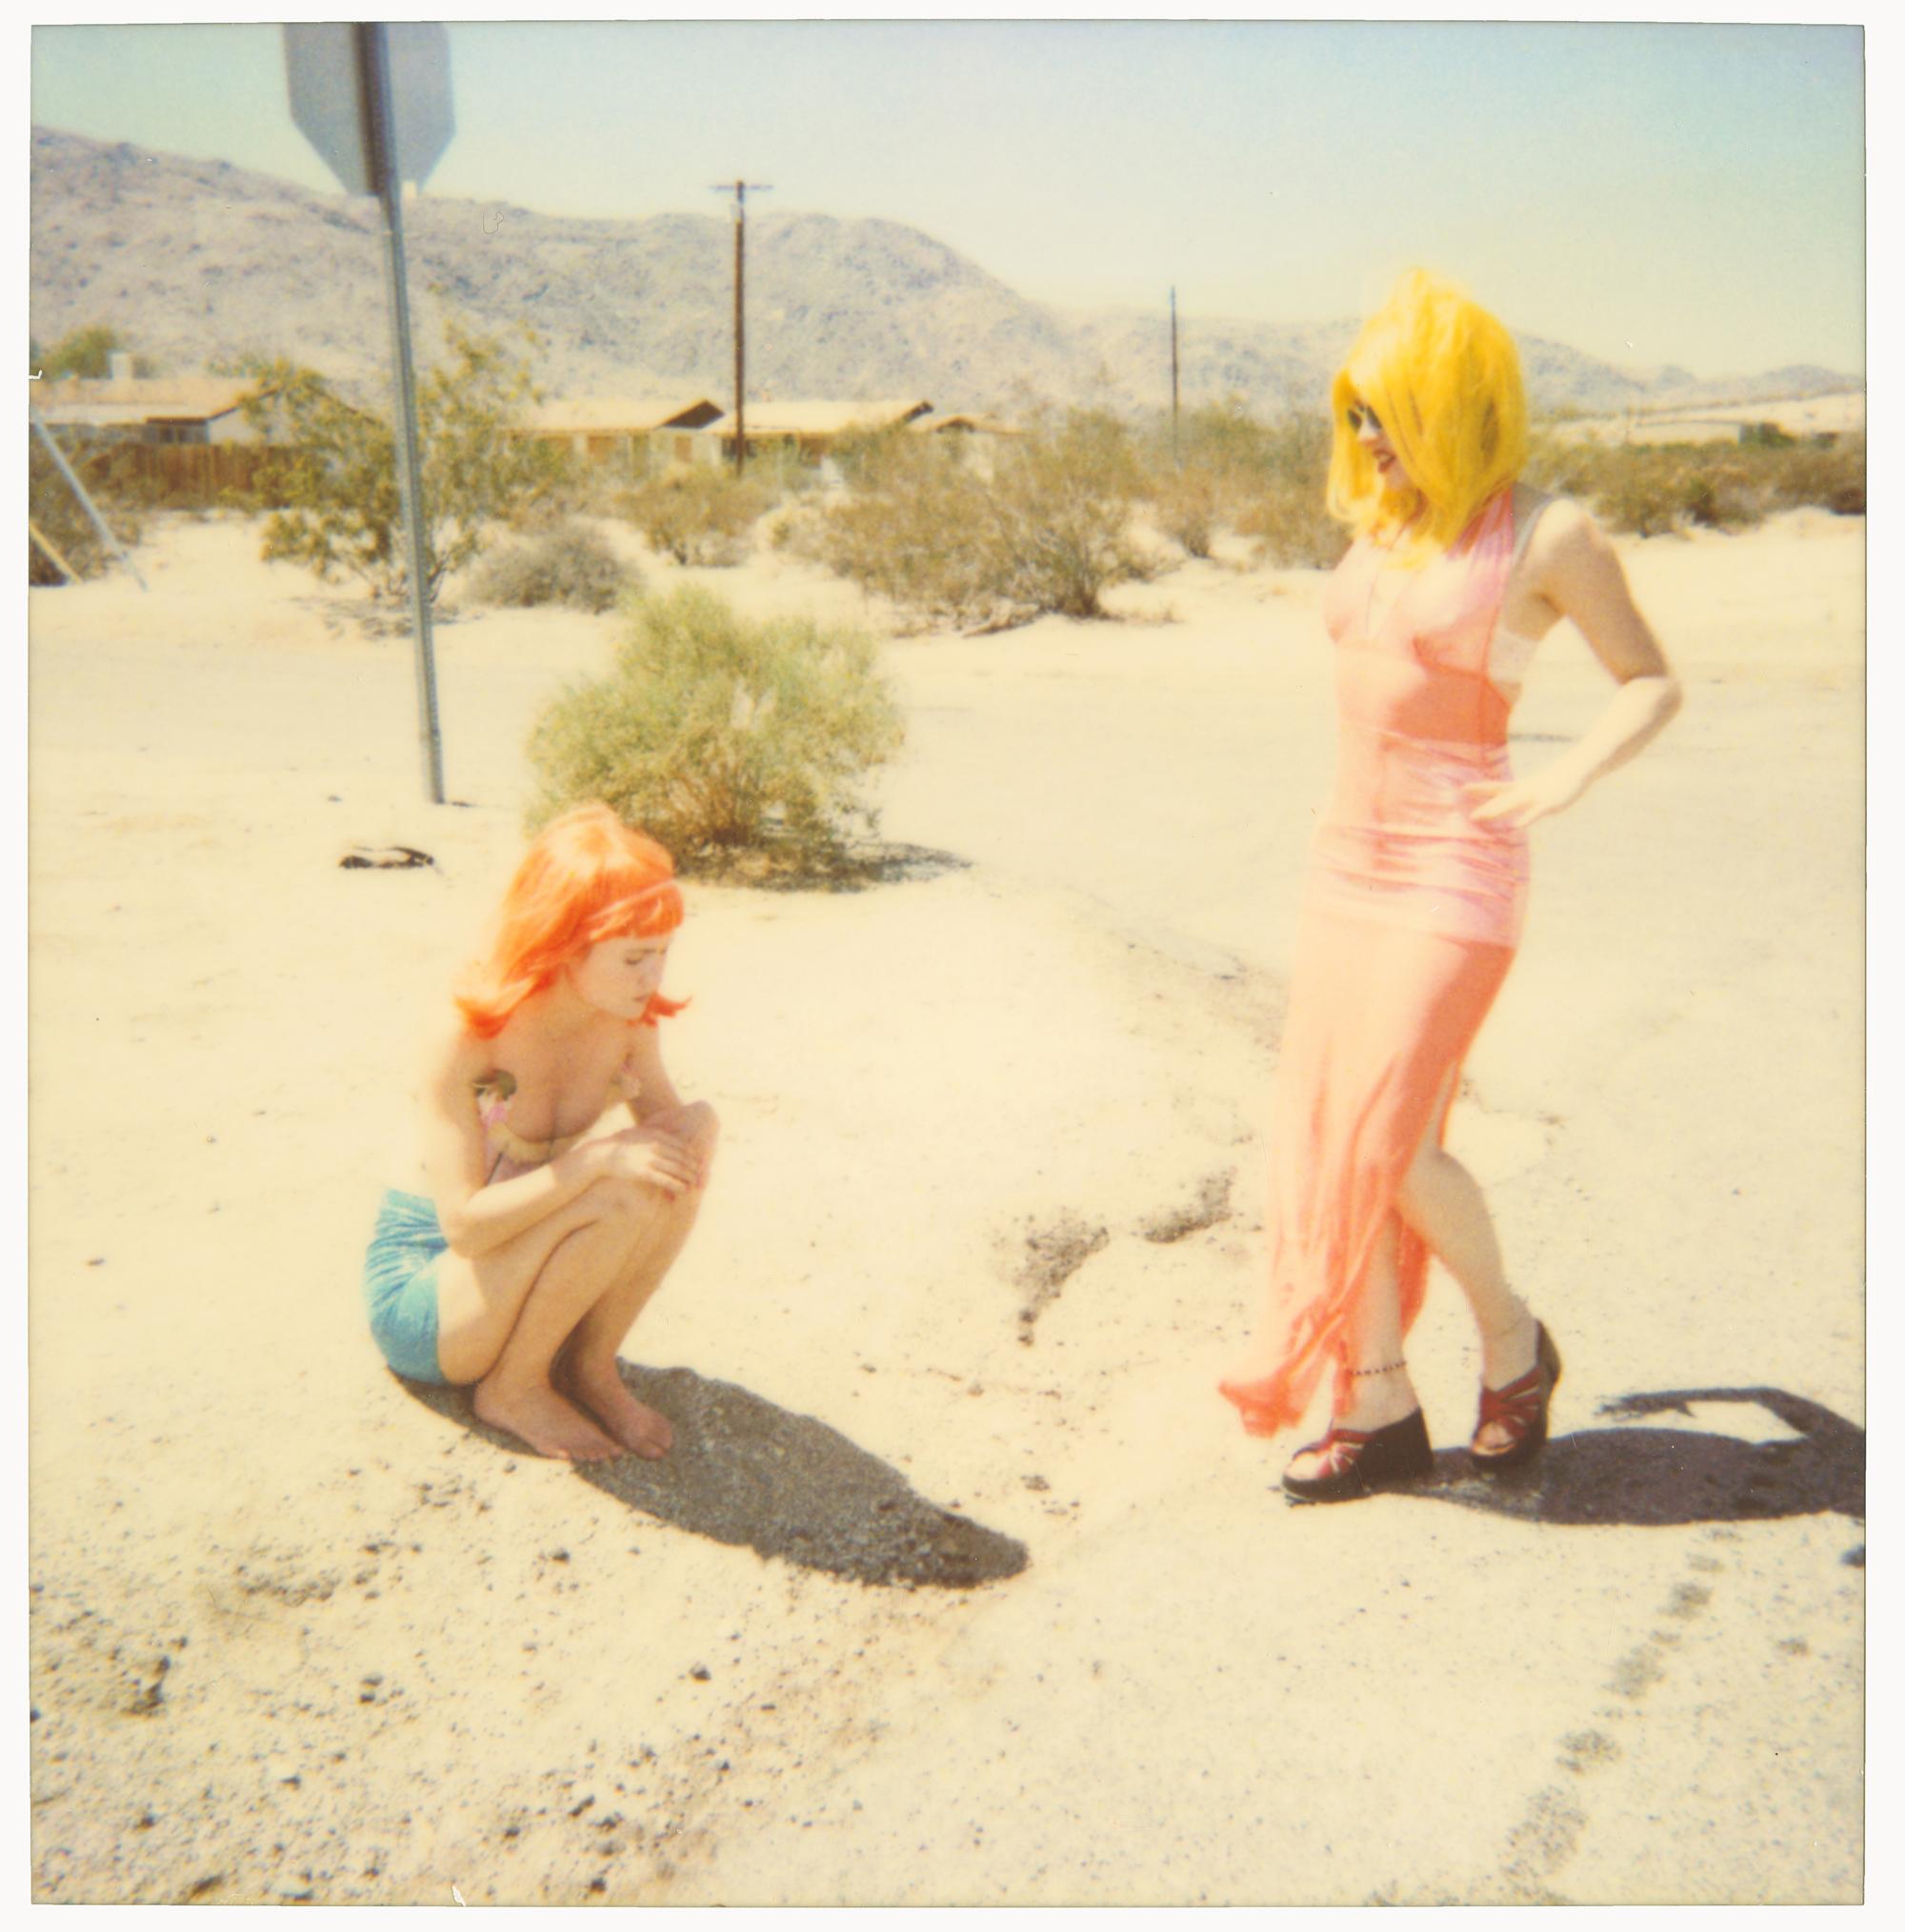 Stefanie Schneider Color Photograph - Radha and Max on Dirt Road (29 Palms, CA) - analog, Polaroid, Contemporary